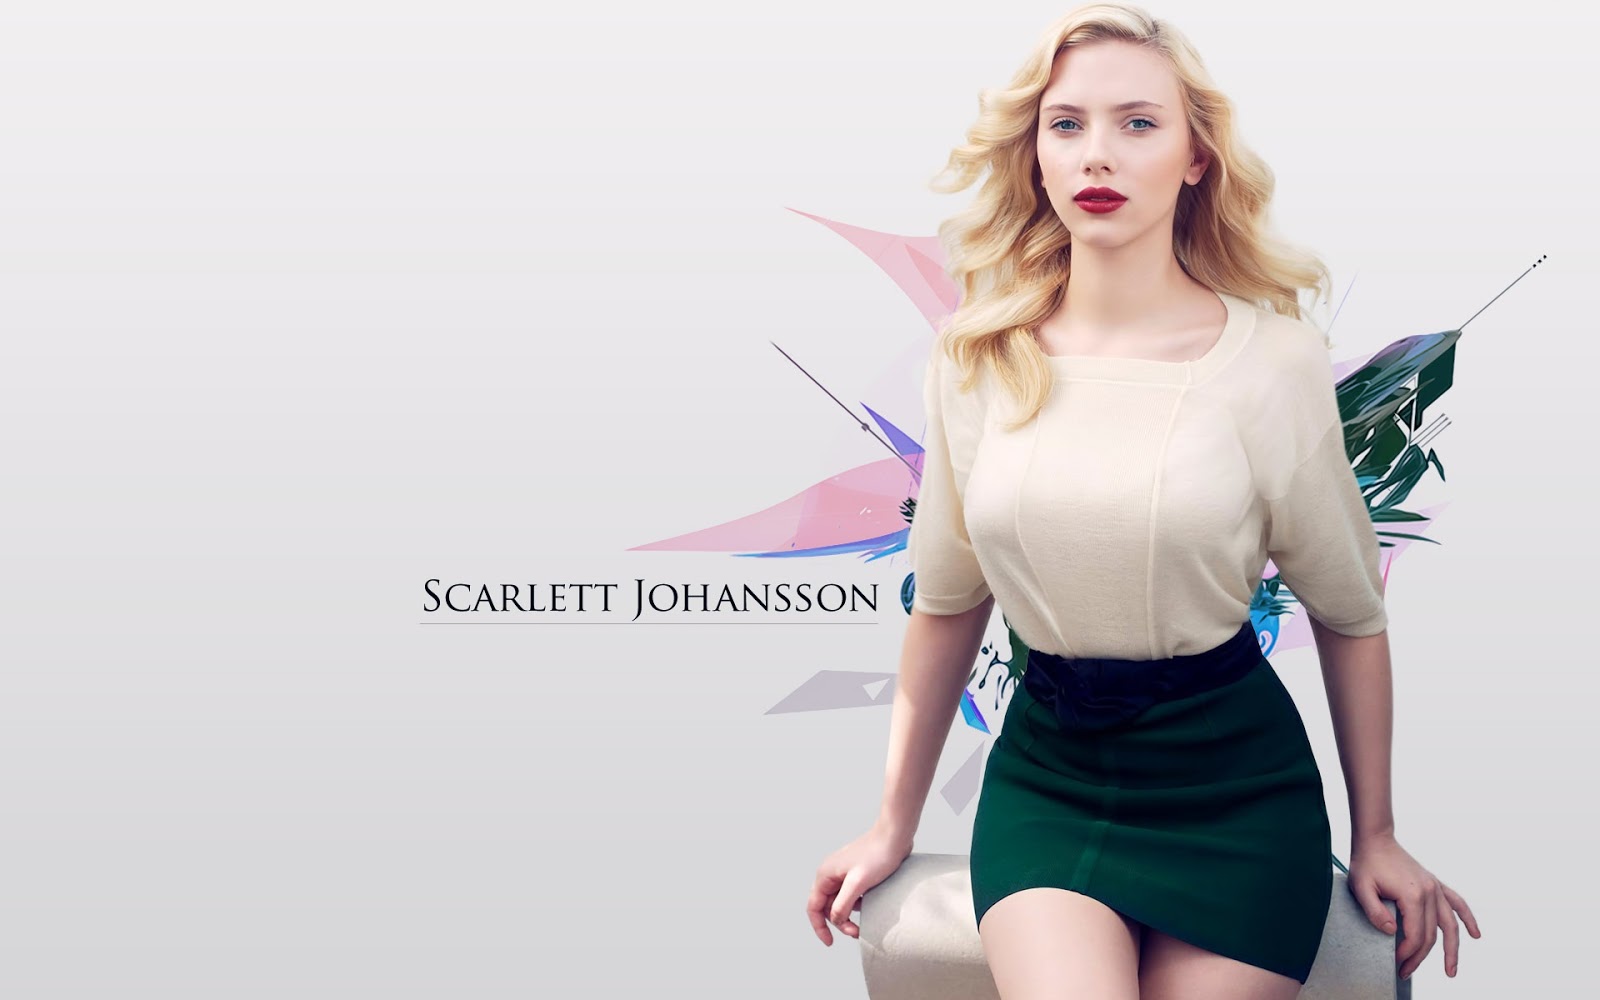 Scarlett Johansson Hollywood Actress Hot And Sexy